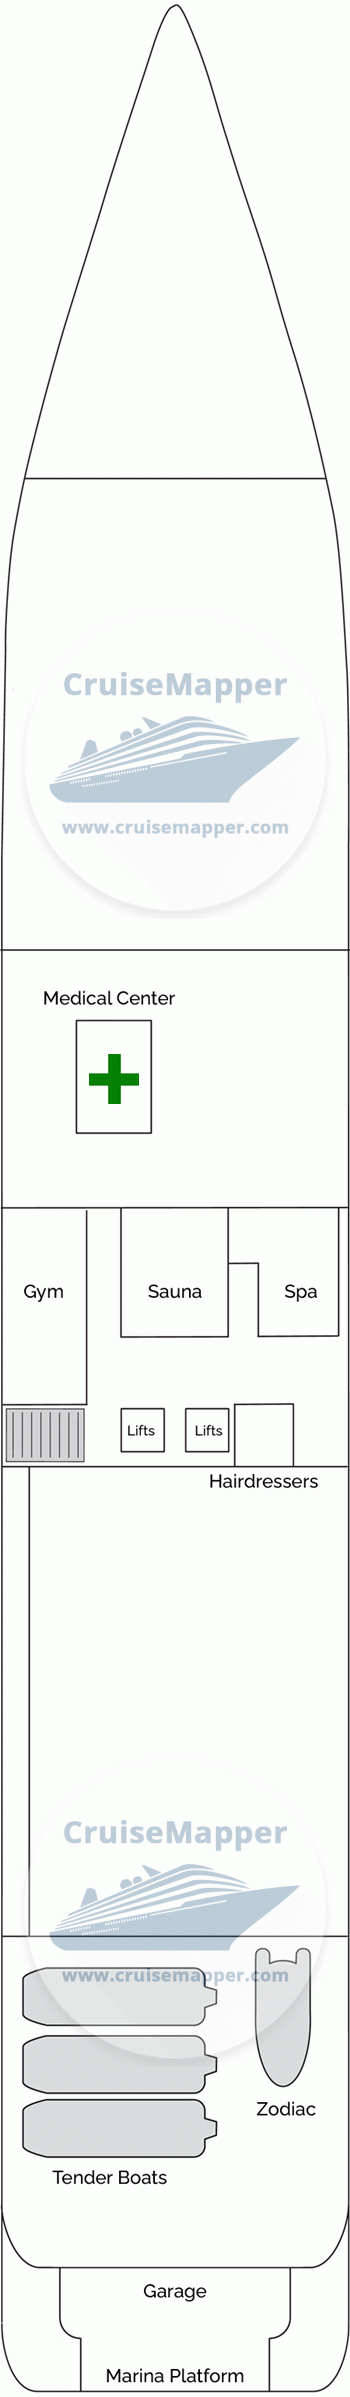 Emerald Azzurra Deck 02 - Wellness-Spa-Gym-Hospital-Marina